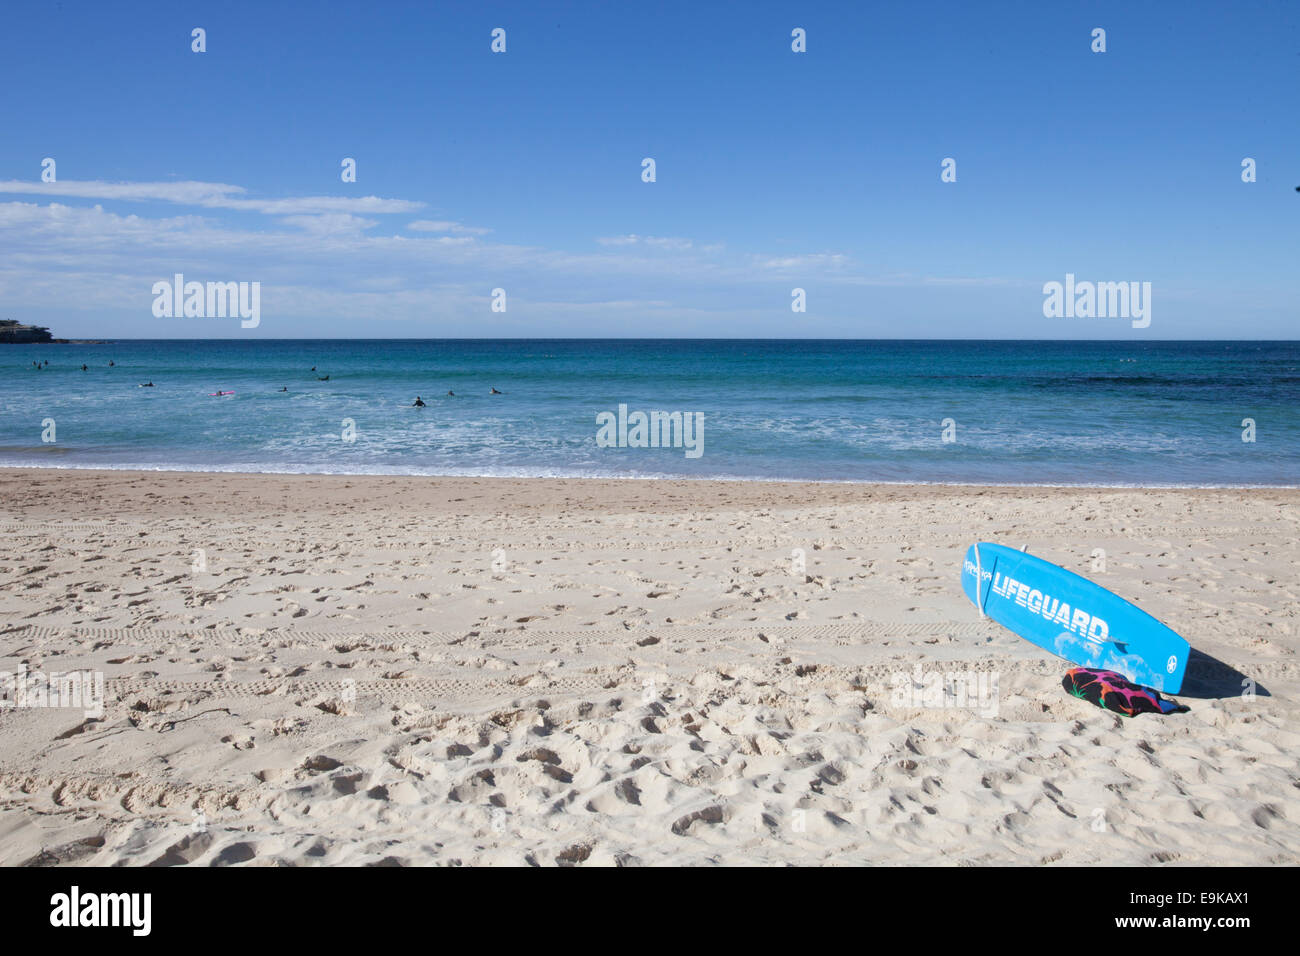 Lifeguard sign on Bondi beach, Sydney, Australia Stock Photo